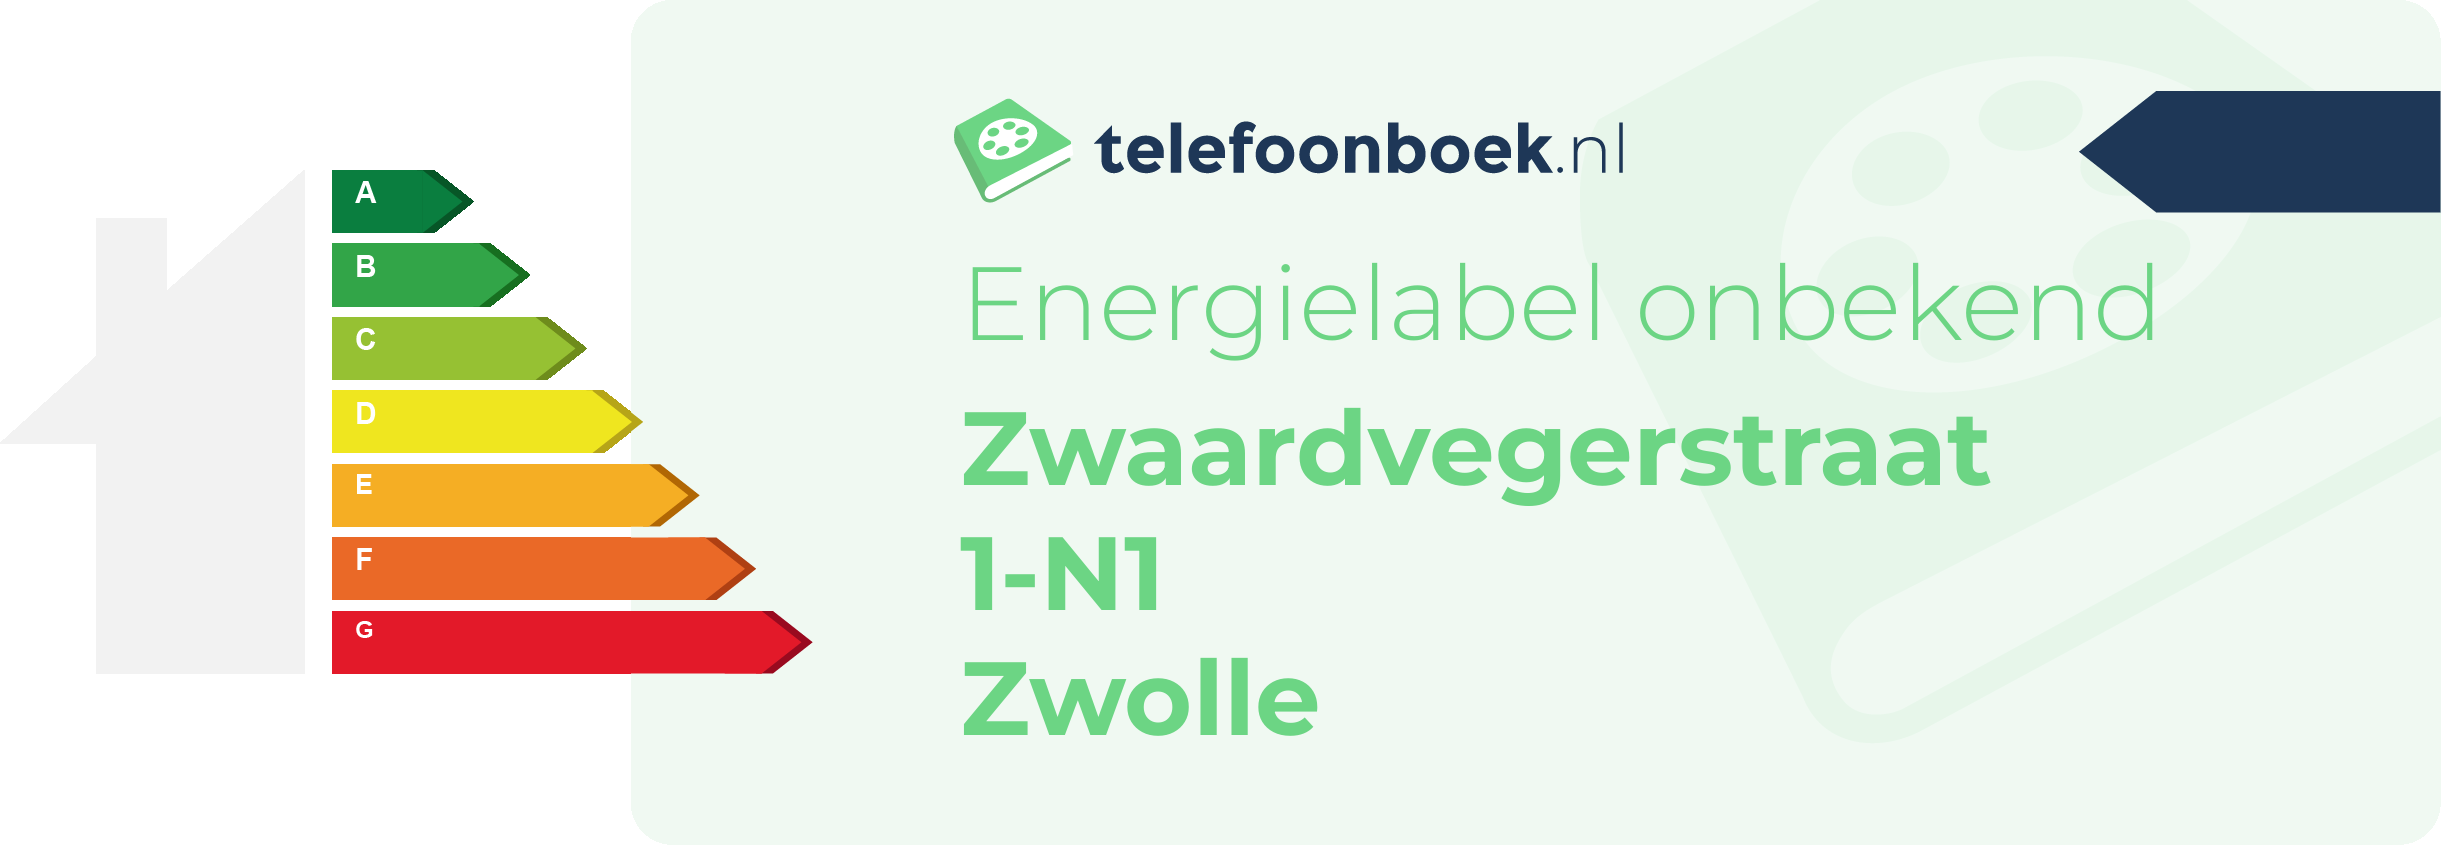 Energielabel Zwaardvegerstraat 1-N1 Zwolle